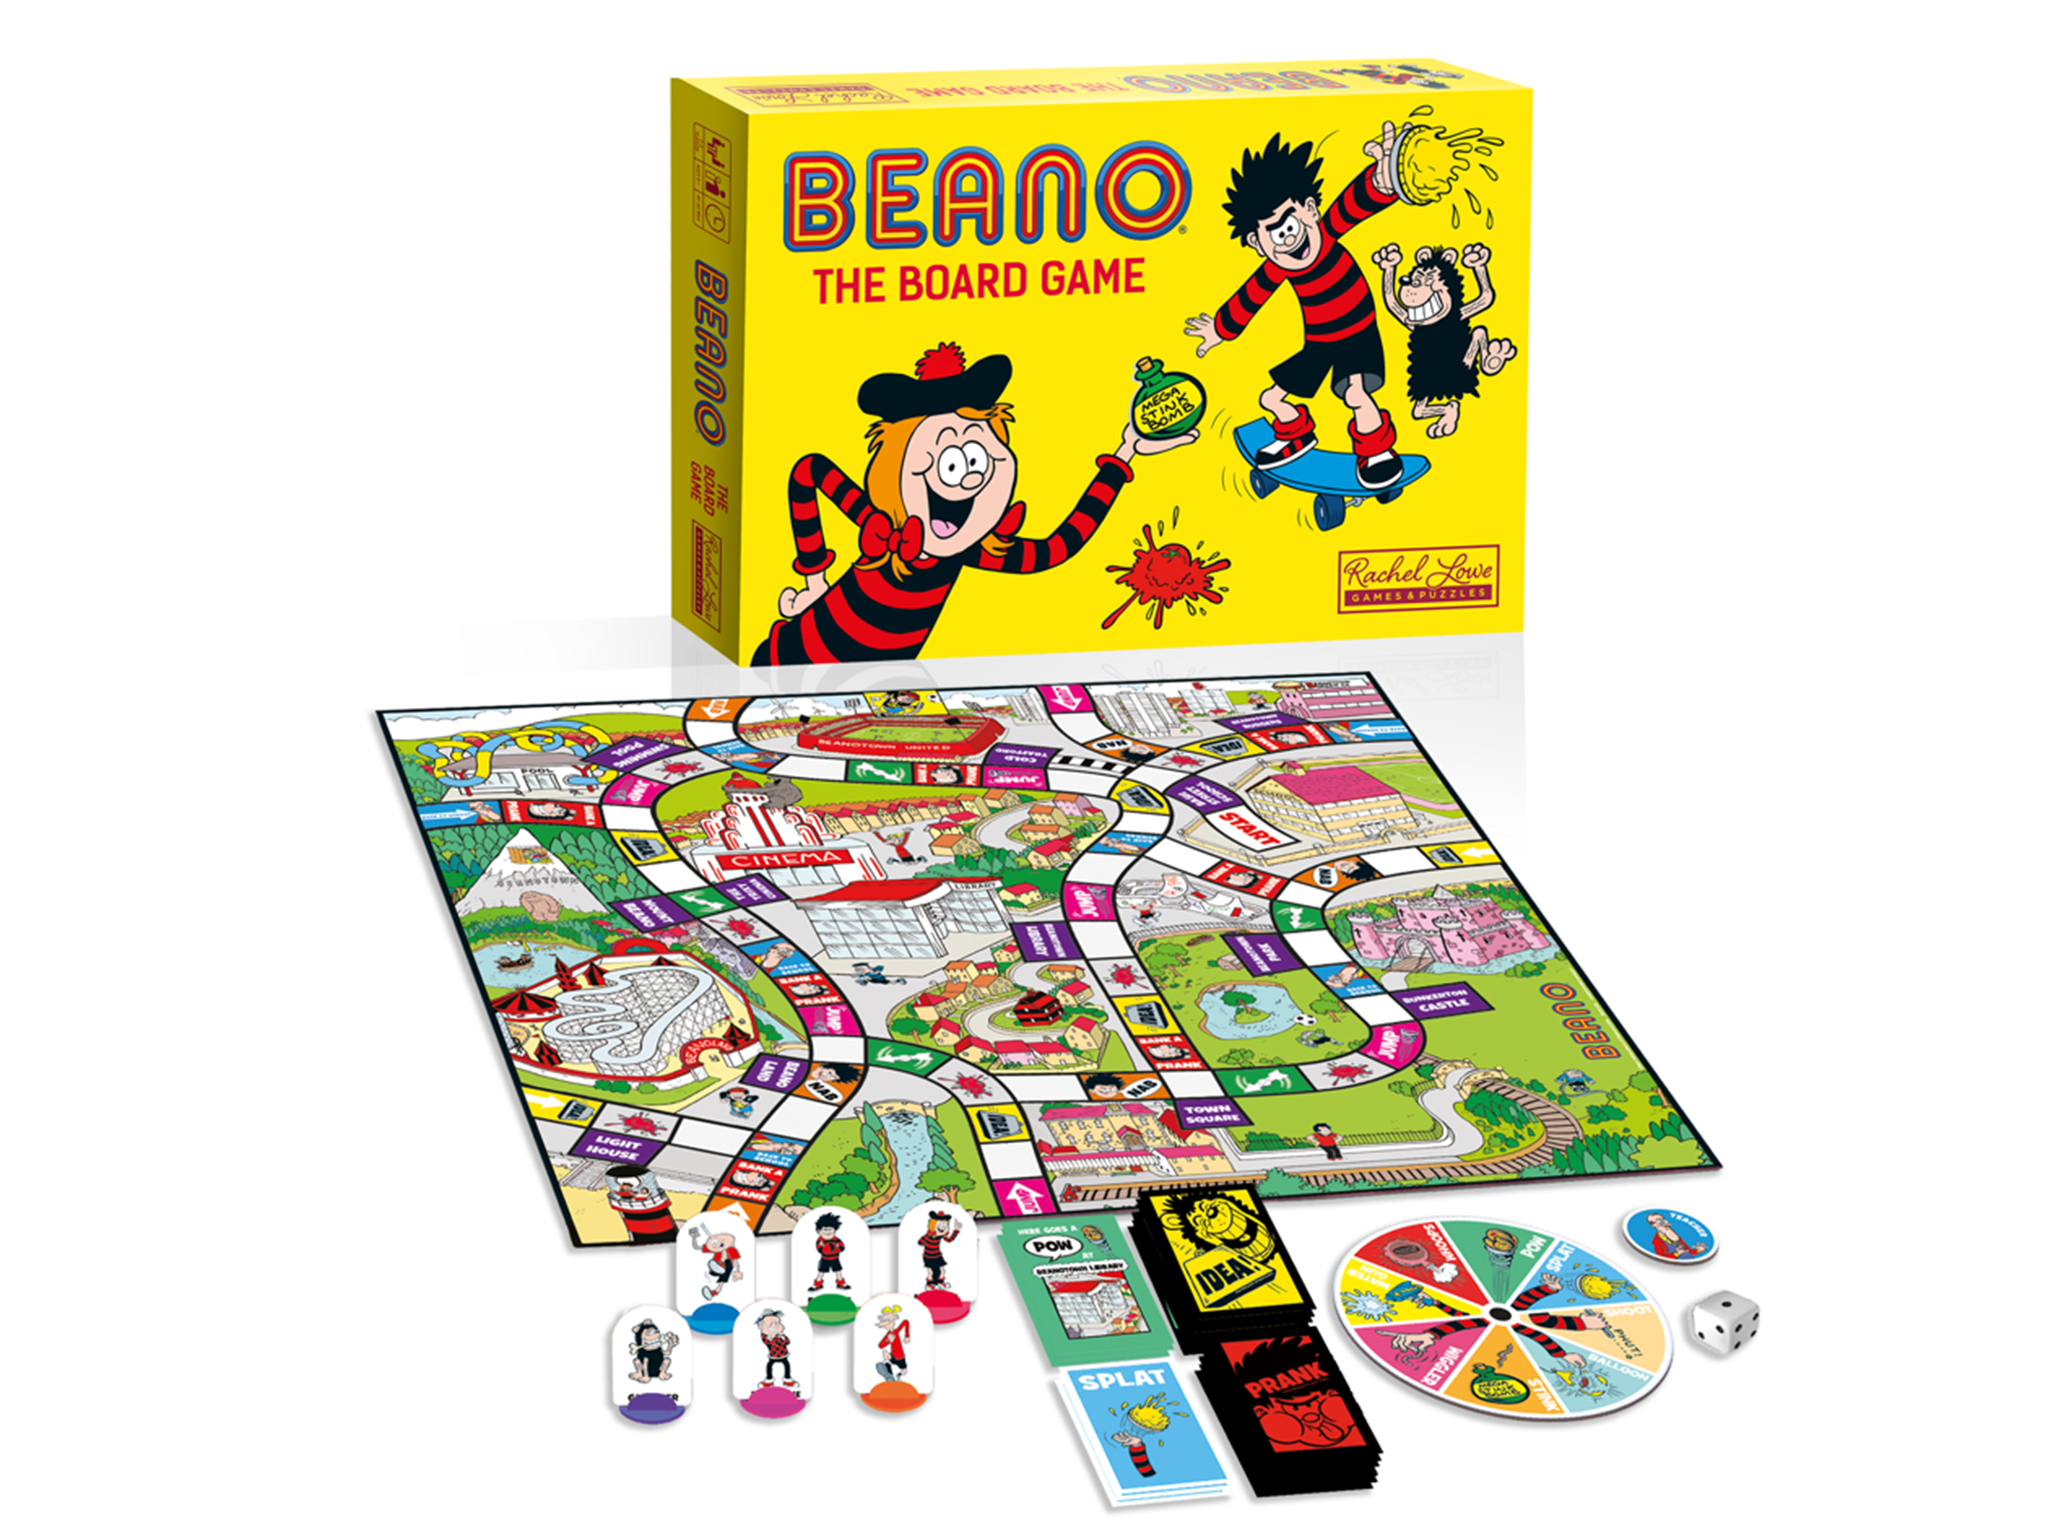 Pivit Speedy strategy Fun board Game for Kids Teenage gift Multi player UK NEW 